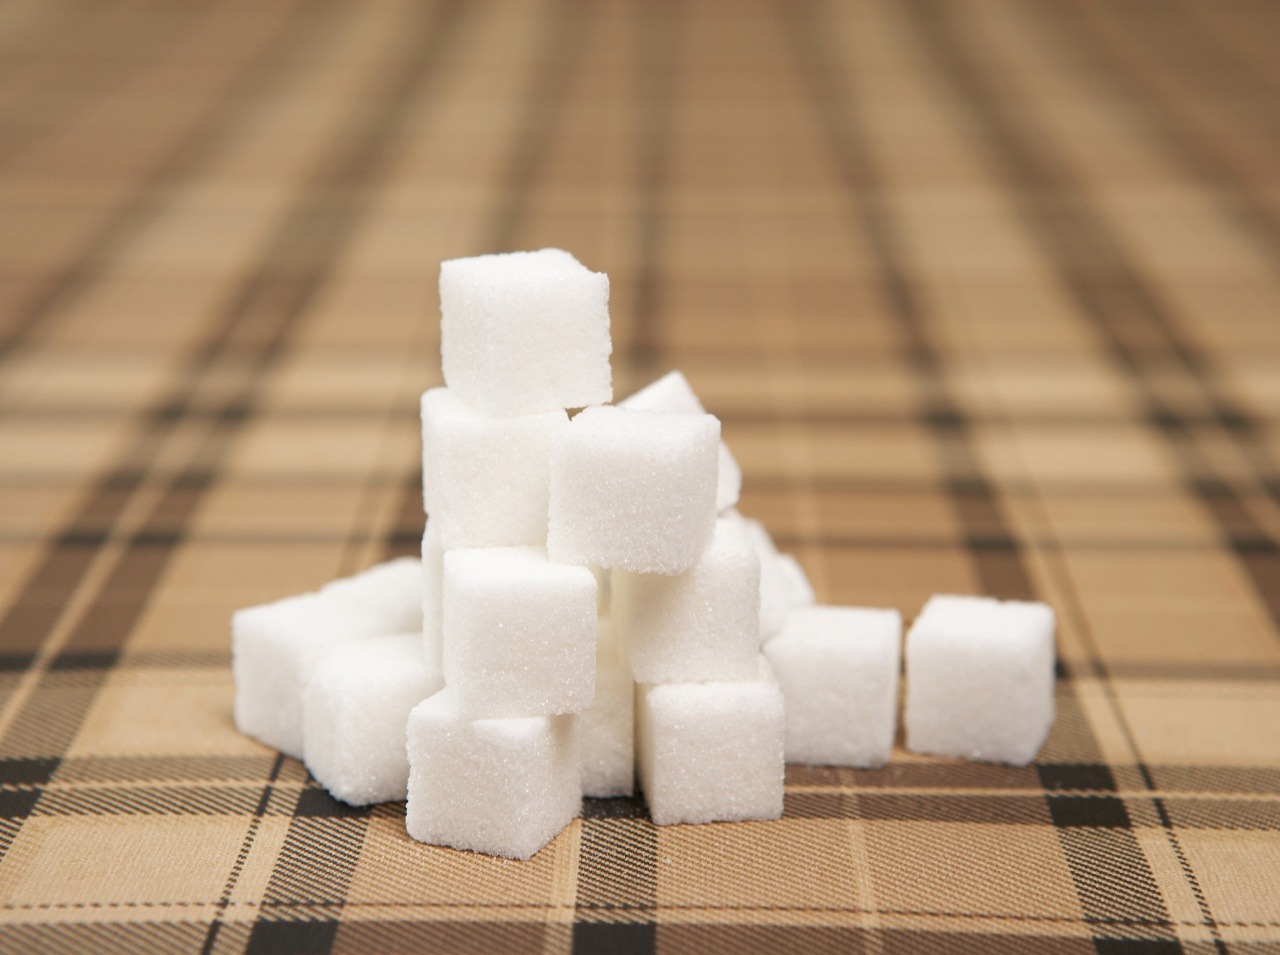 Biely cukor sa považuje za zabijaka 21. storočia. 